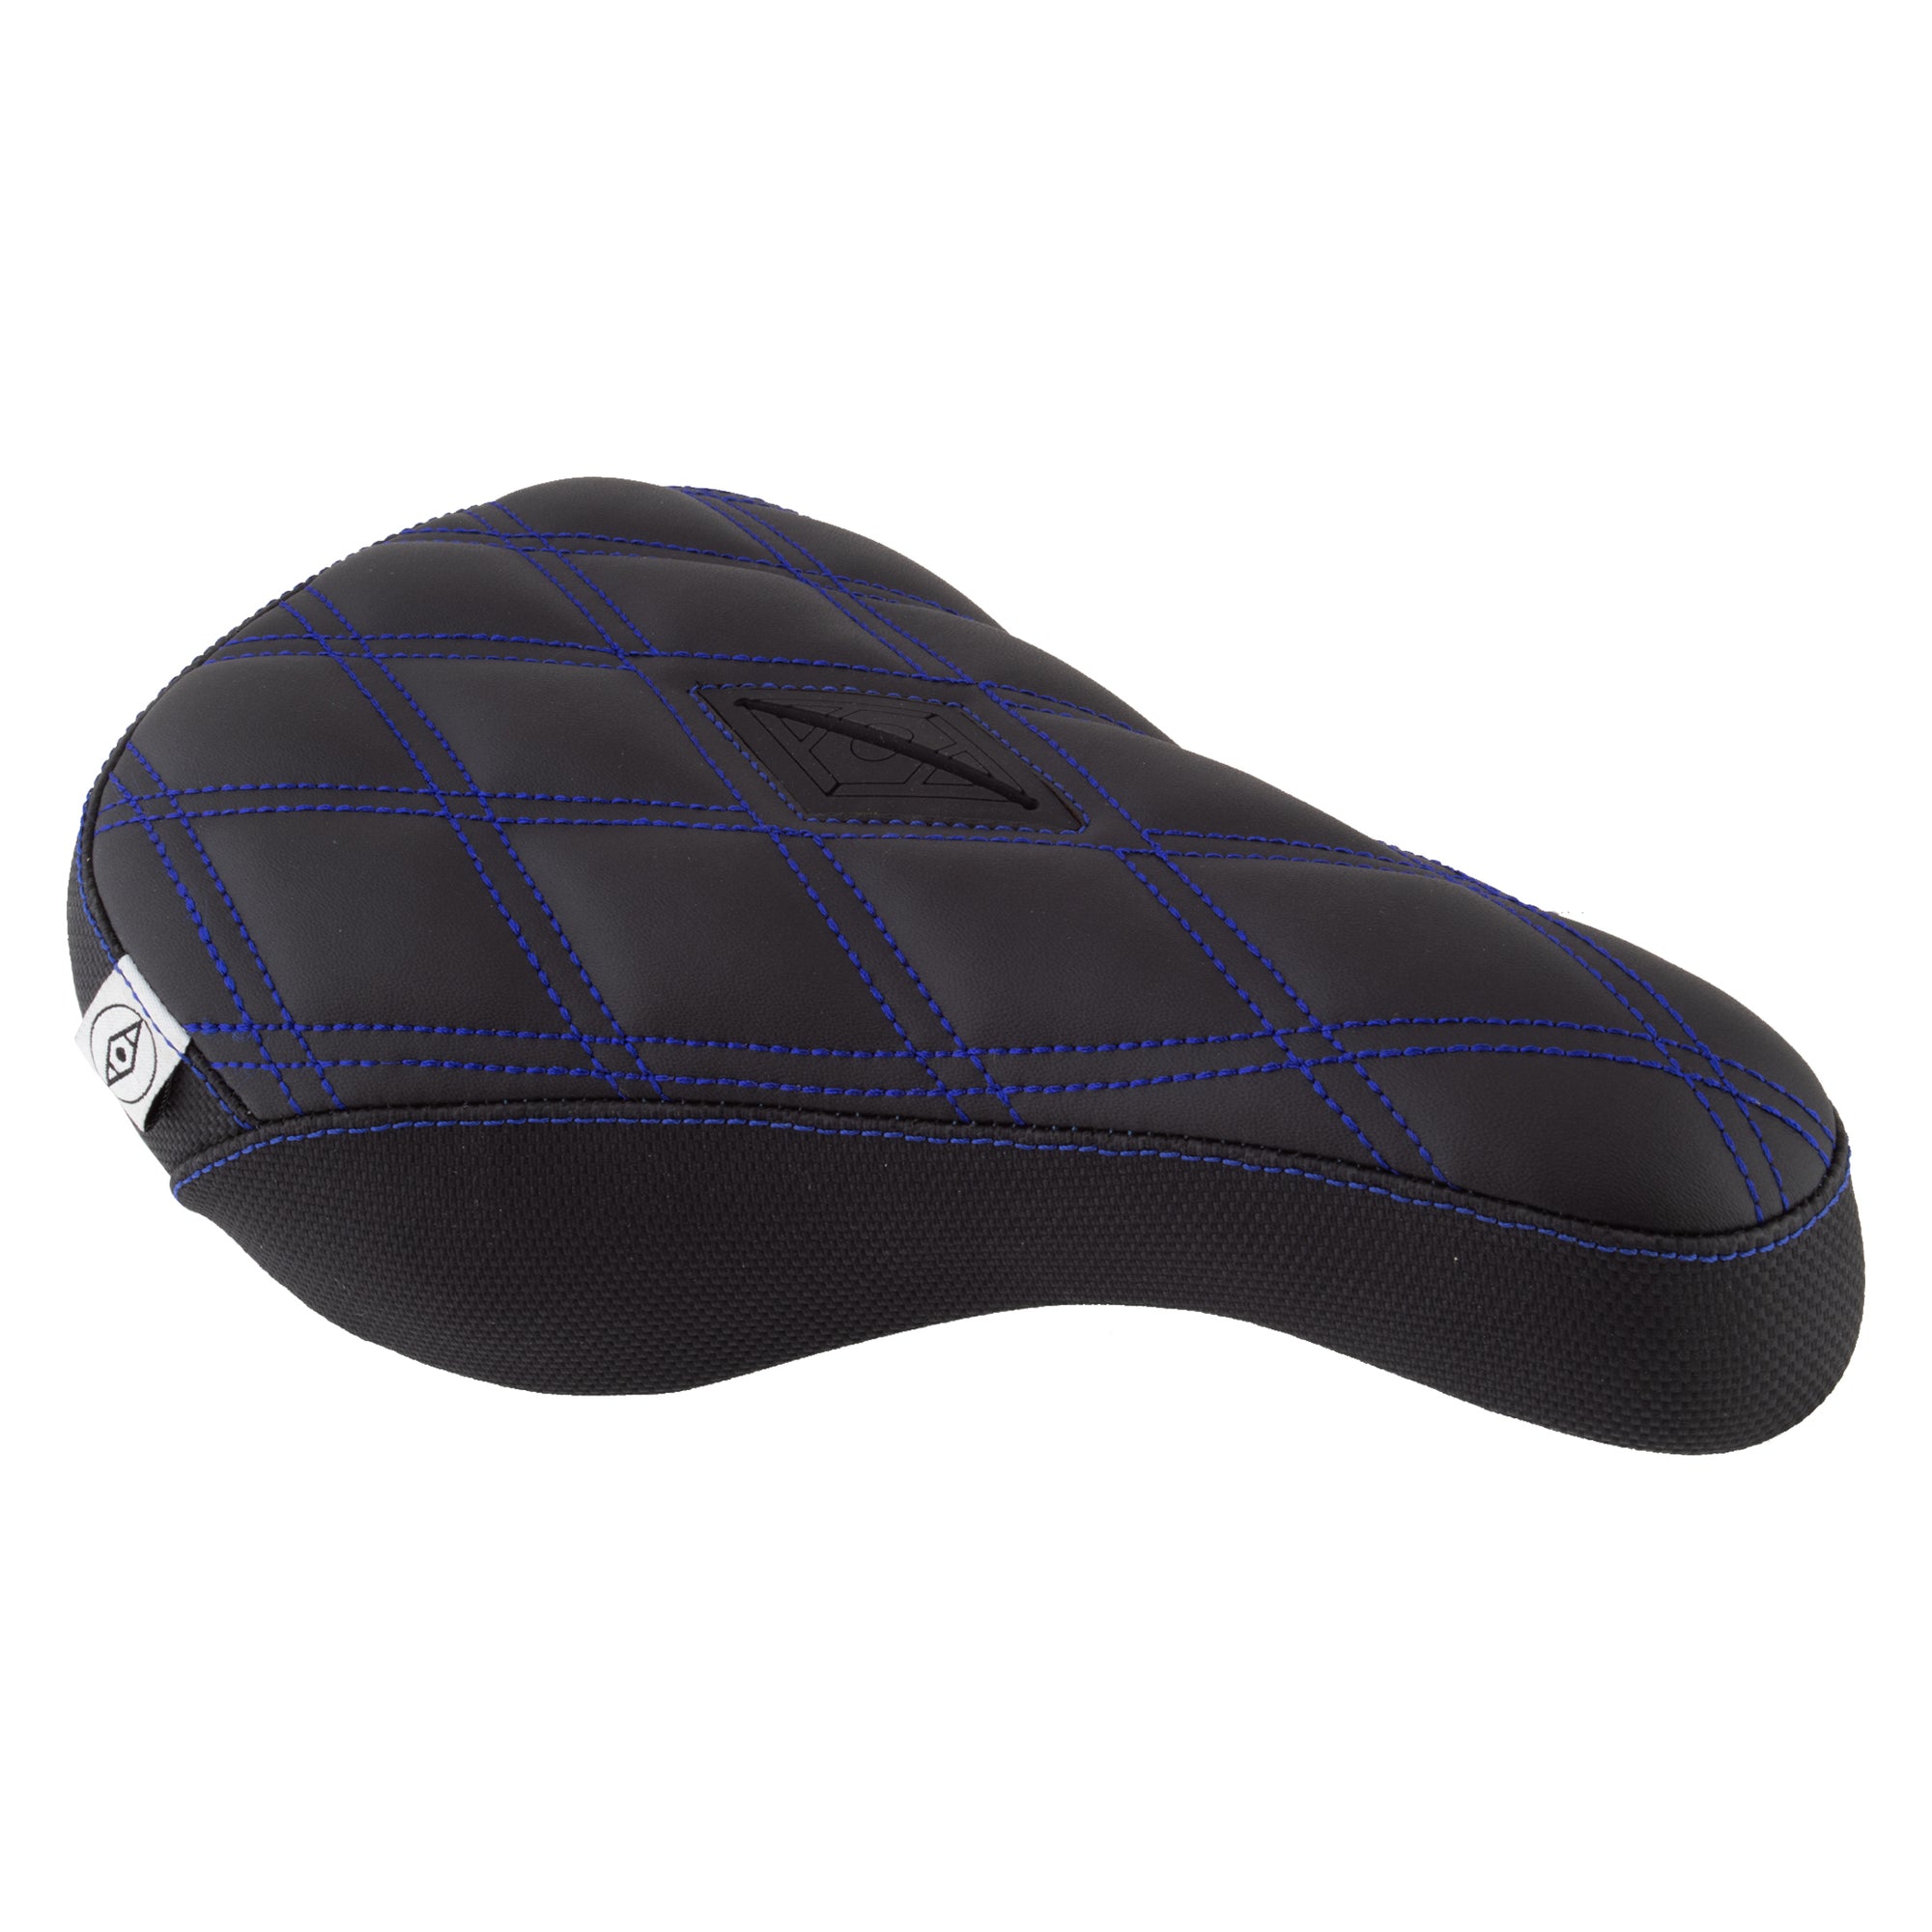 Alienation Gripper Padded Pivotal BMX Seat - Black/Blue